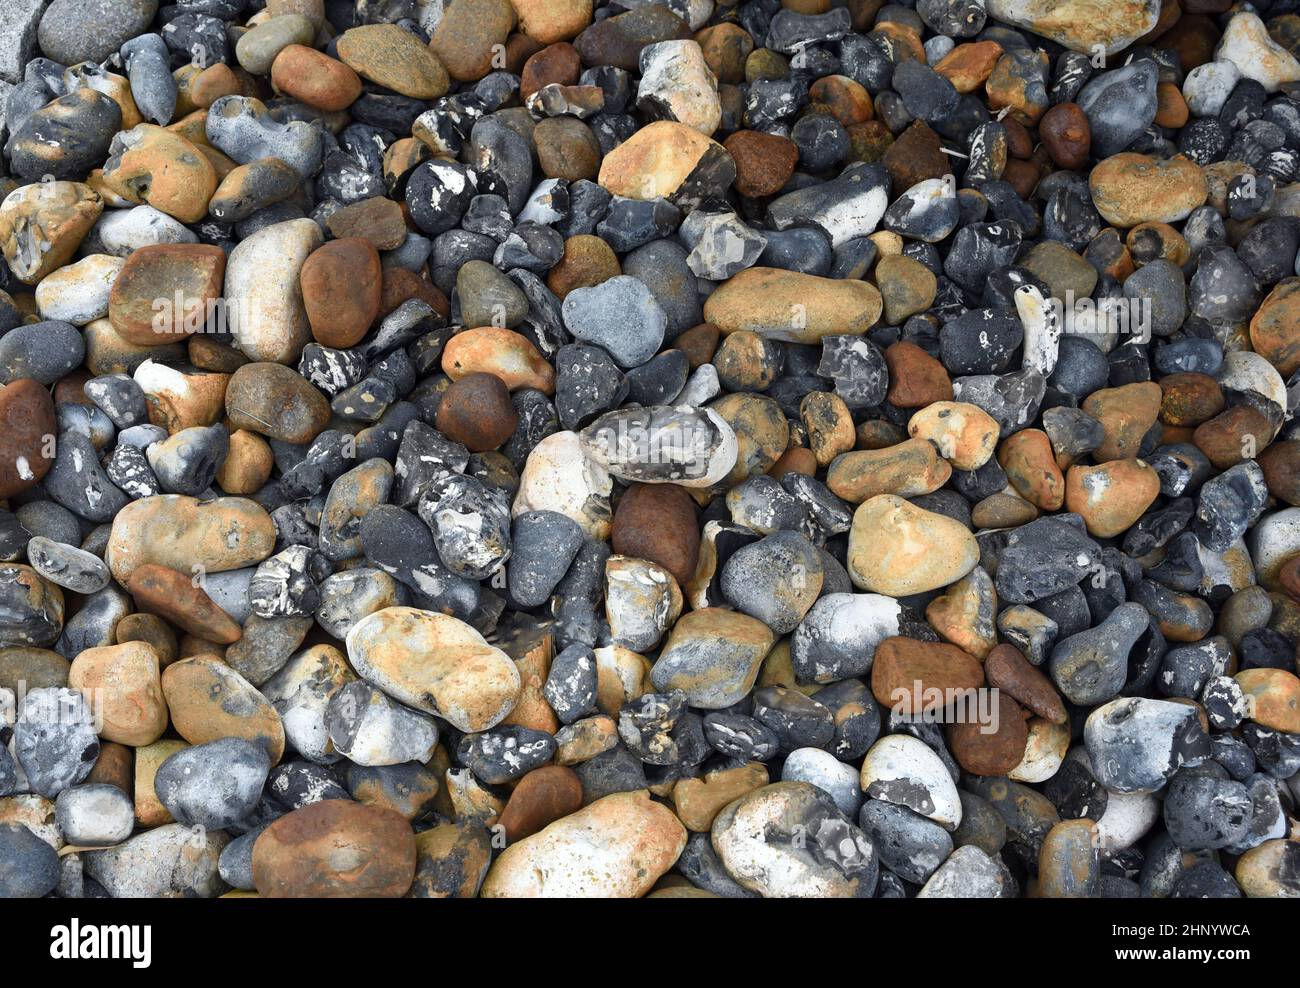 Kieselsteine an der Ostseekueste sind wunderschoen anzusehen. Pebbles on the Baltic coast are beautiful to look at. Stock Photo